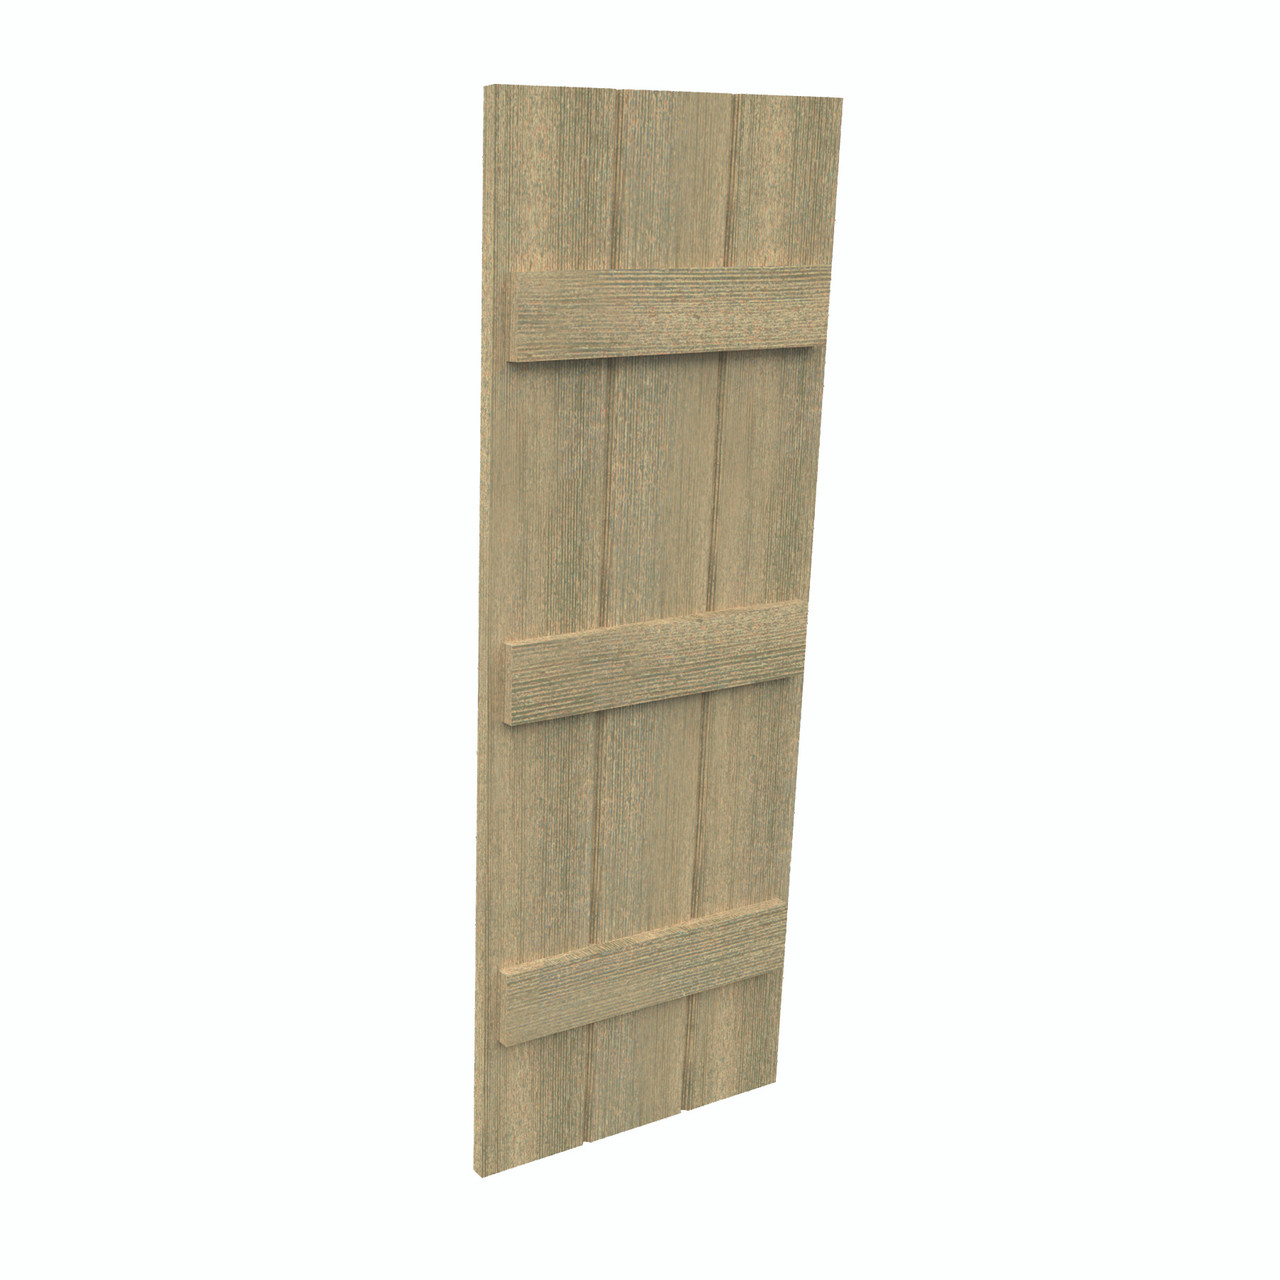 18 inch by 41 inch Plank Shutter with 3-Plank, 3-Batten